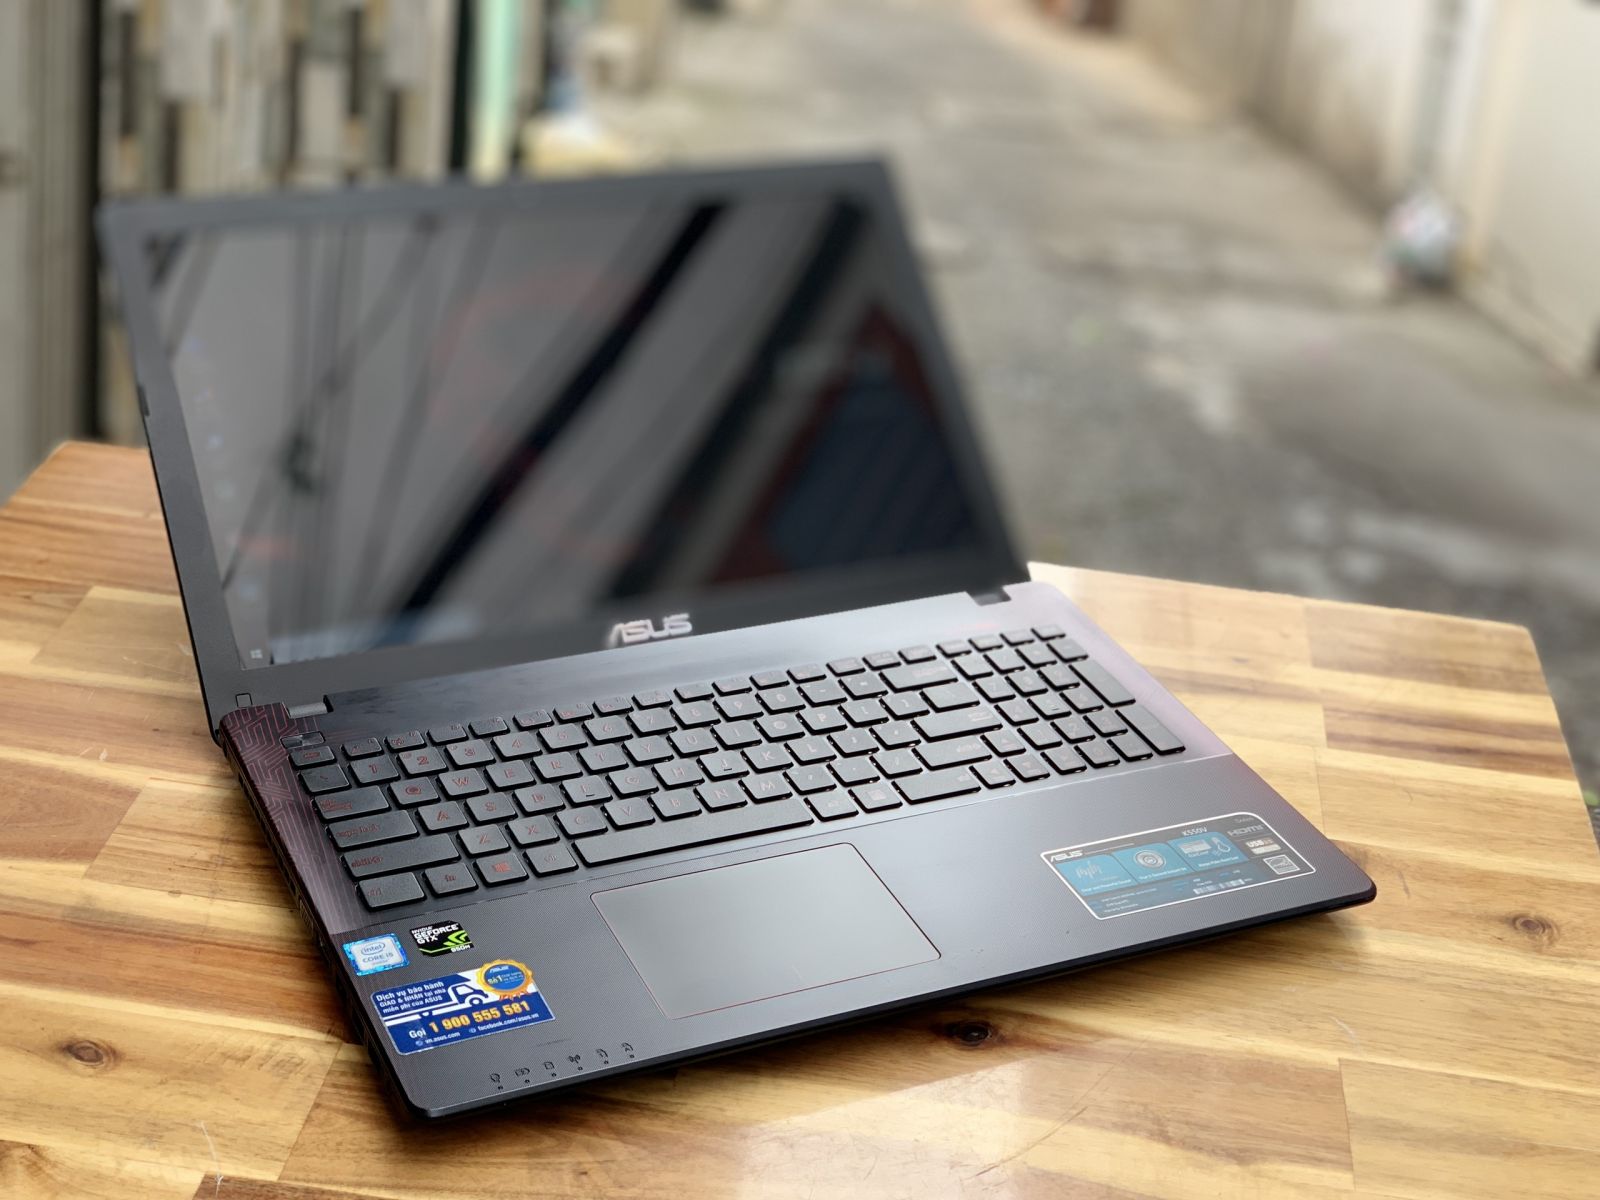 Laptop Asus K550V, i5 6300HQ 4G 1000G Vga GTX950M Đẹp zin 100% Giá rẻ - 2